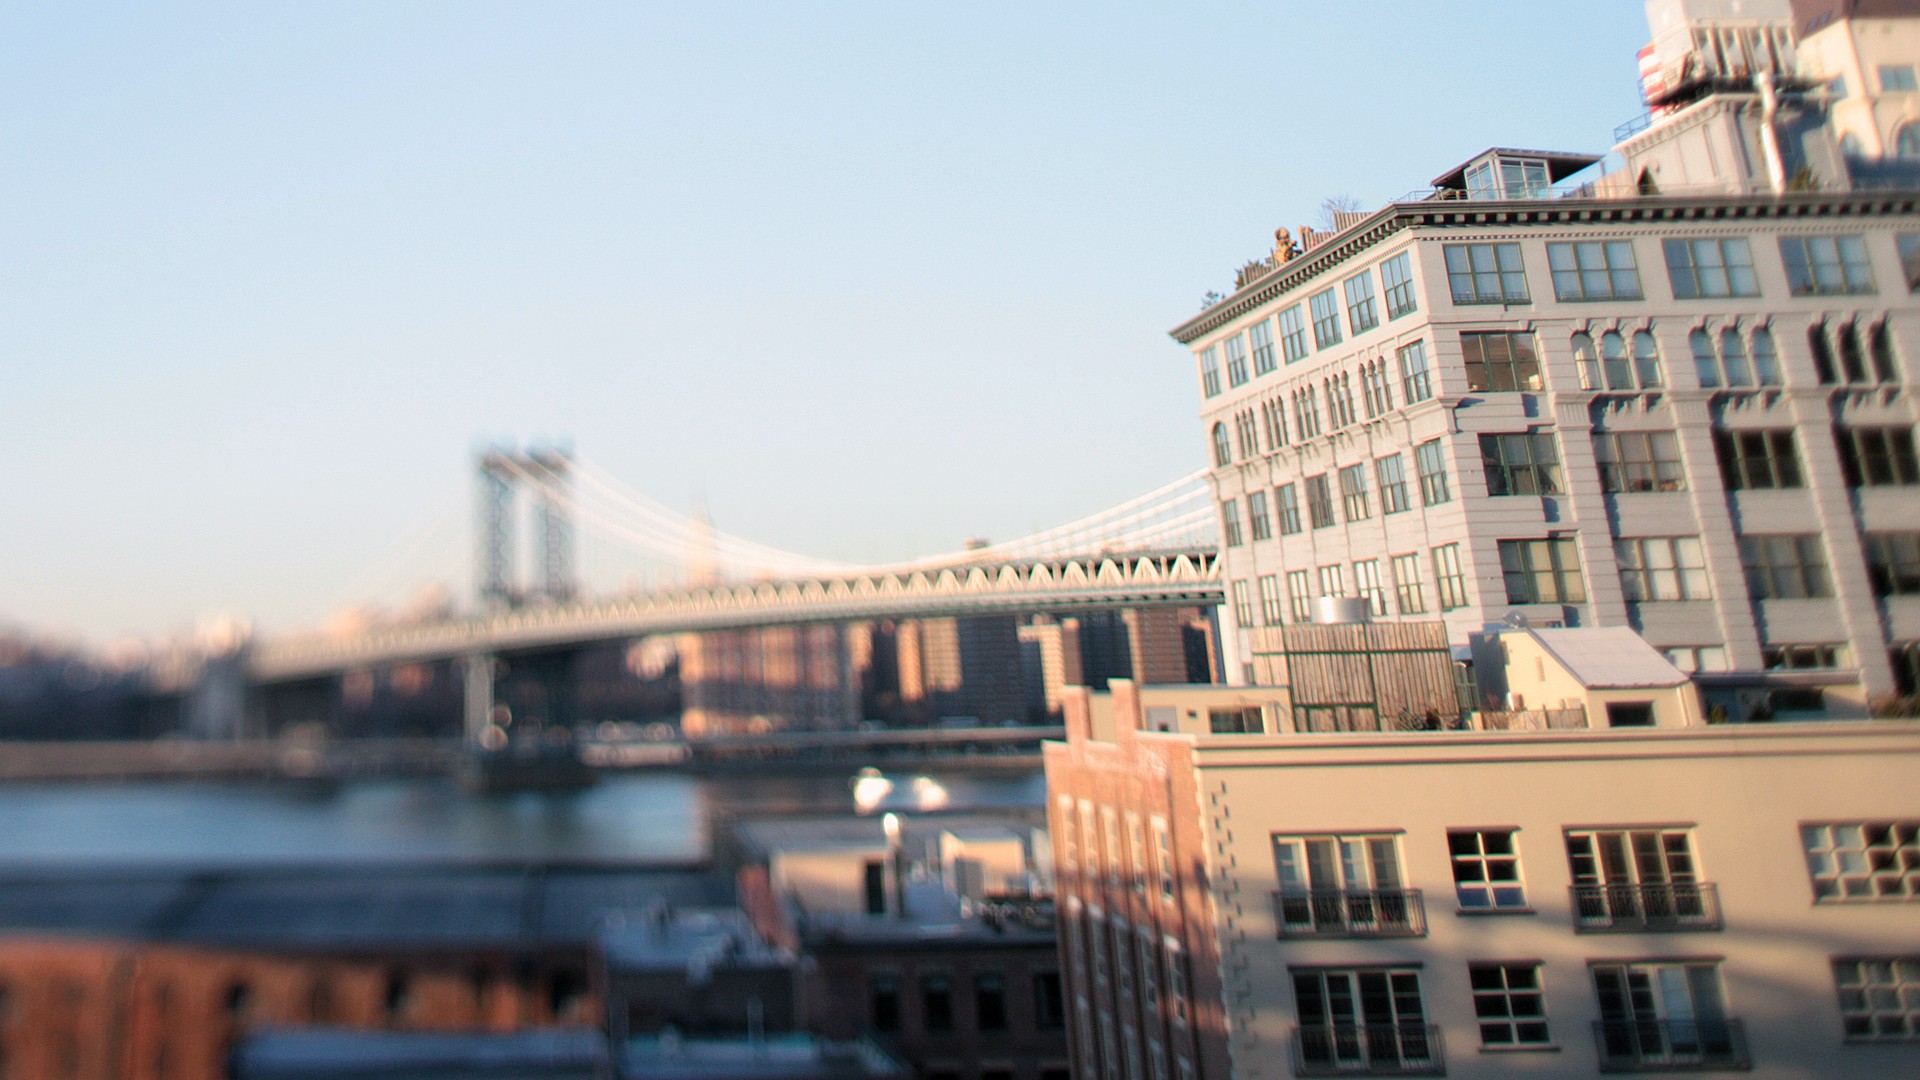 photography, tilt shift, bridge, city, manhattan bridge, new york